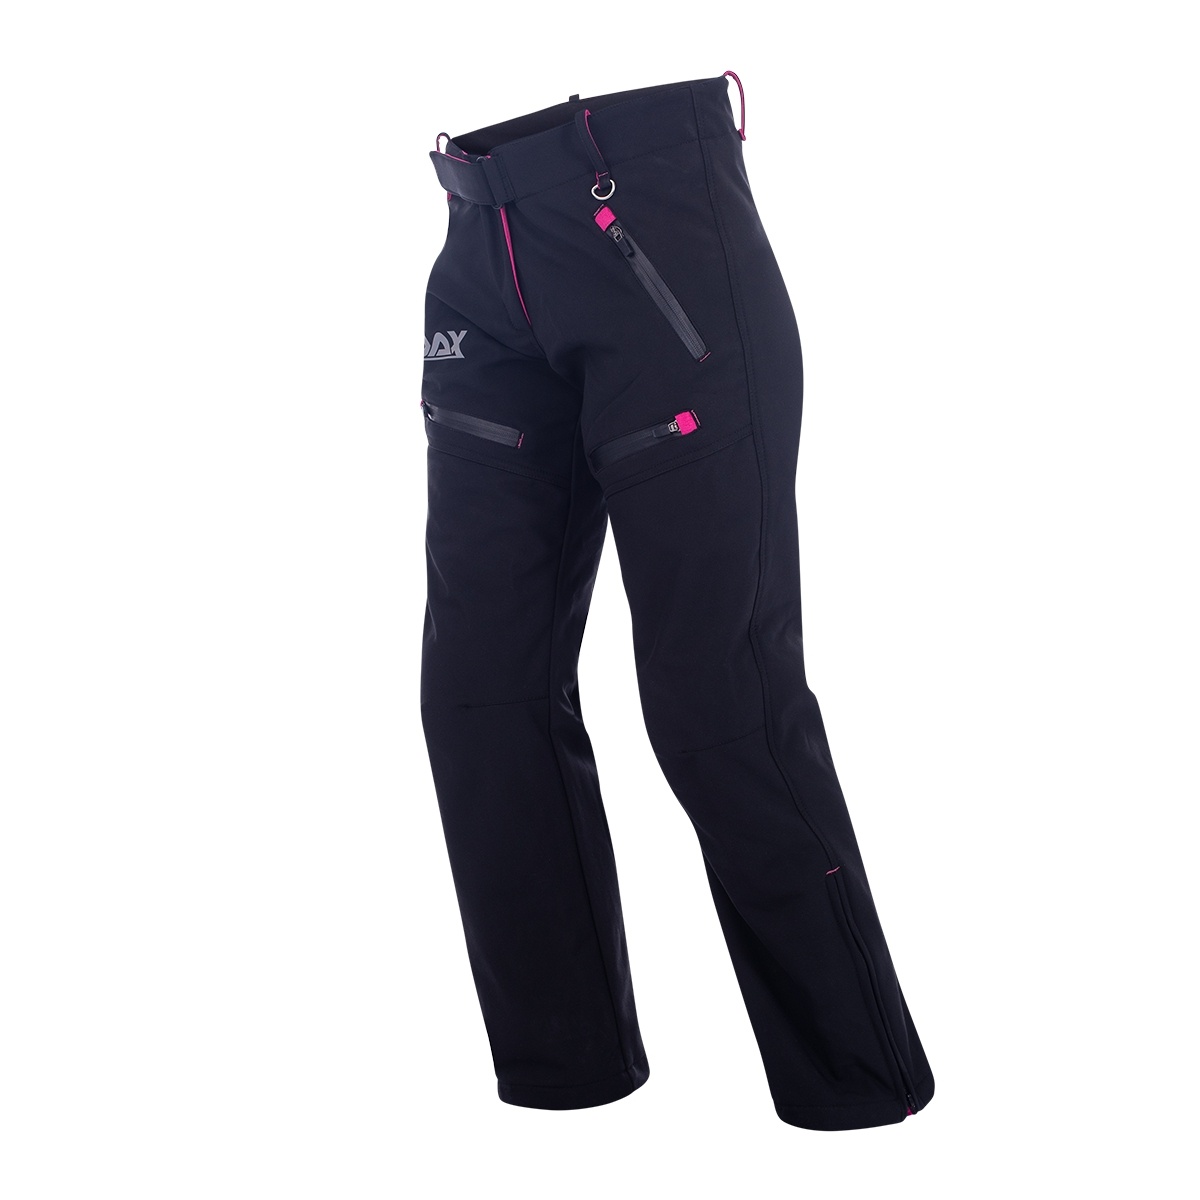 Obrázek produktu DAX LADY kalhoty L, SoftShell, s chrániči 2870-PNT-BP-L